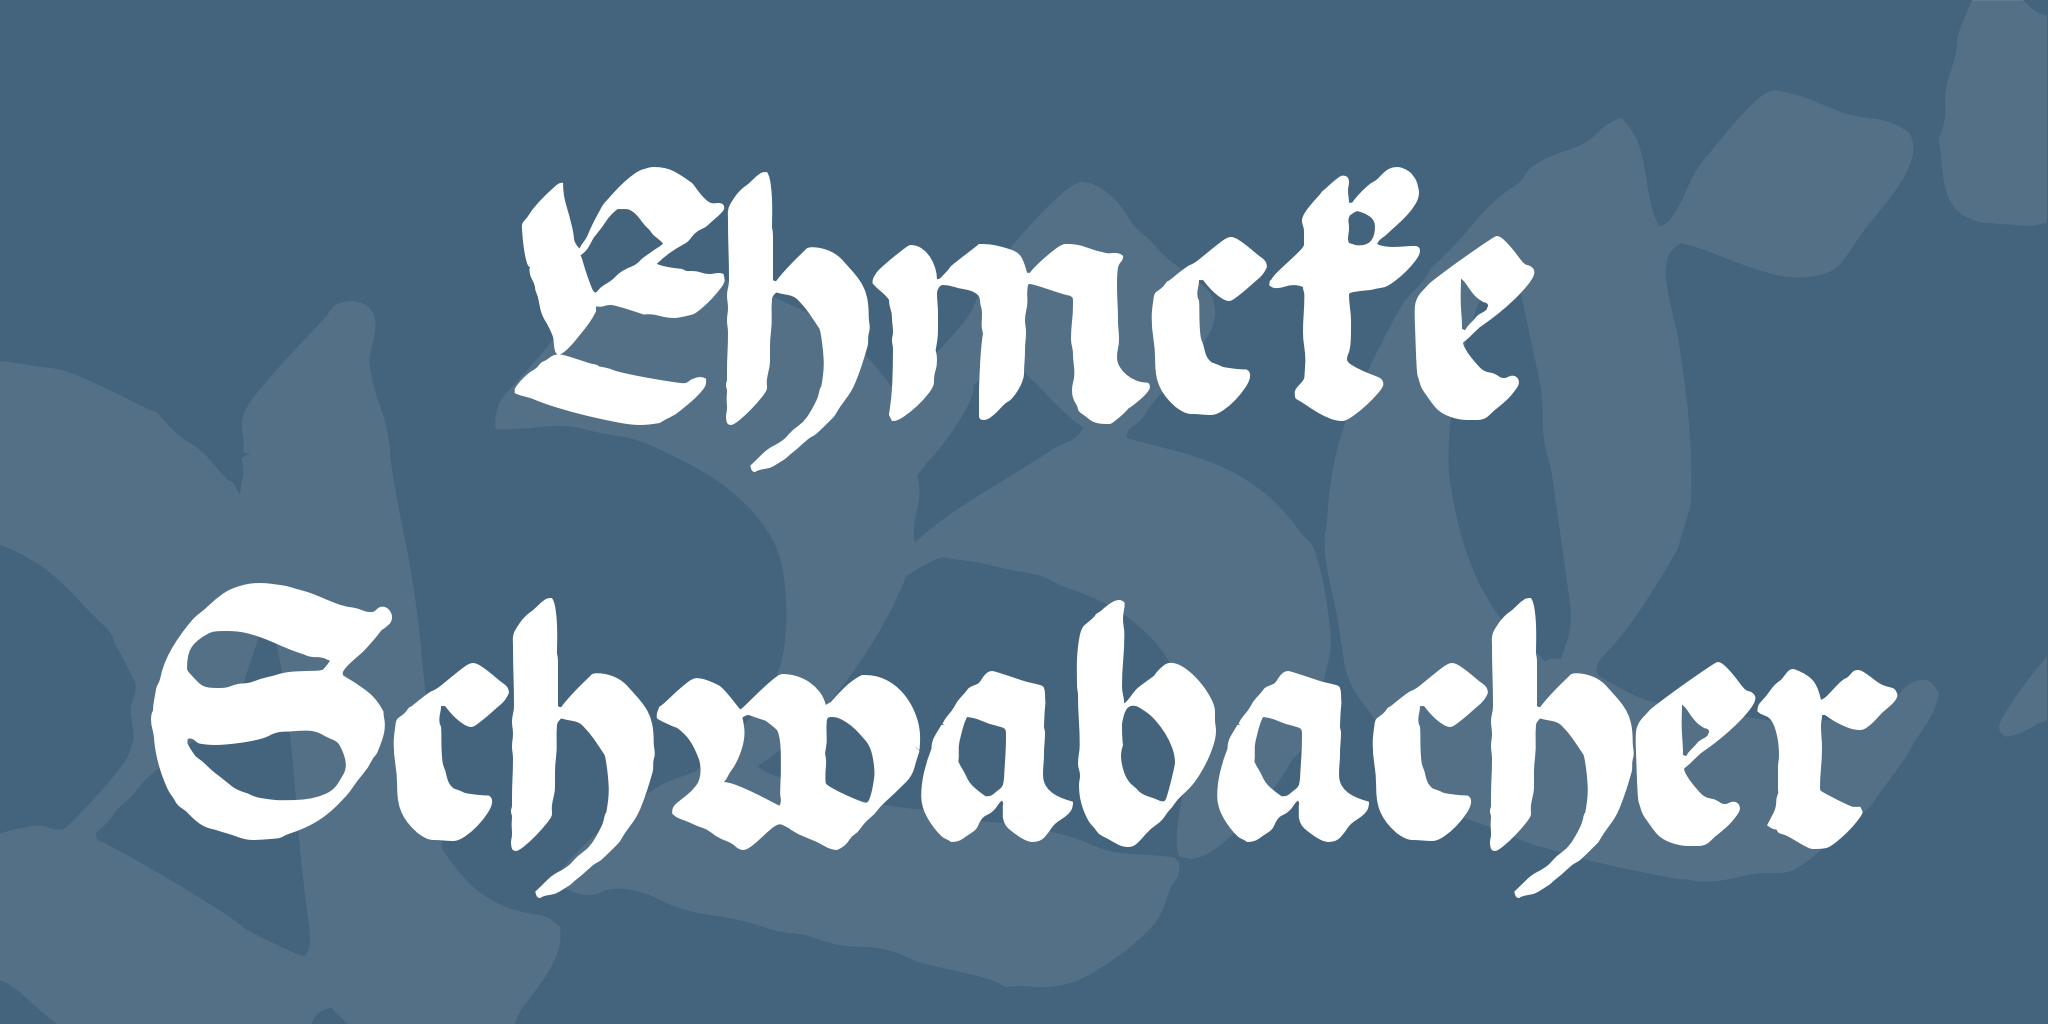 Ehmcke Schwabacher